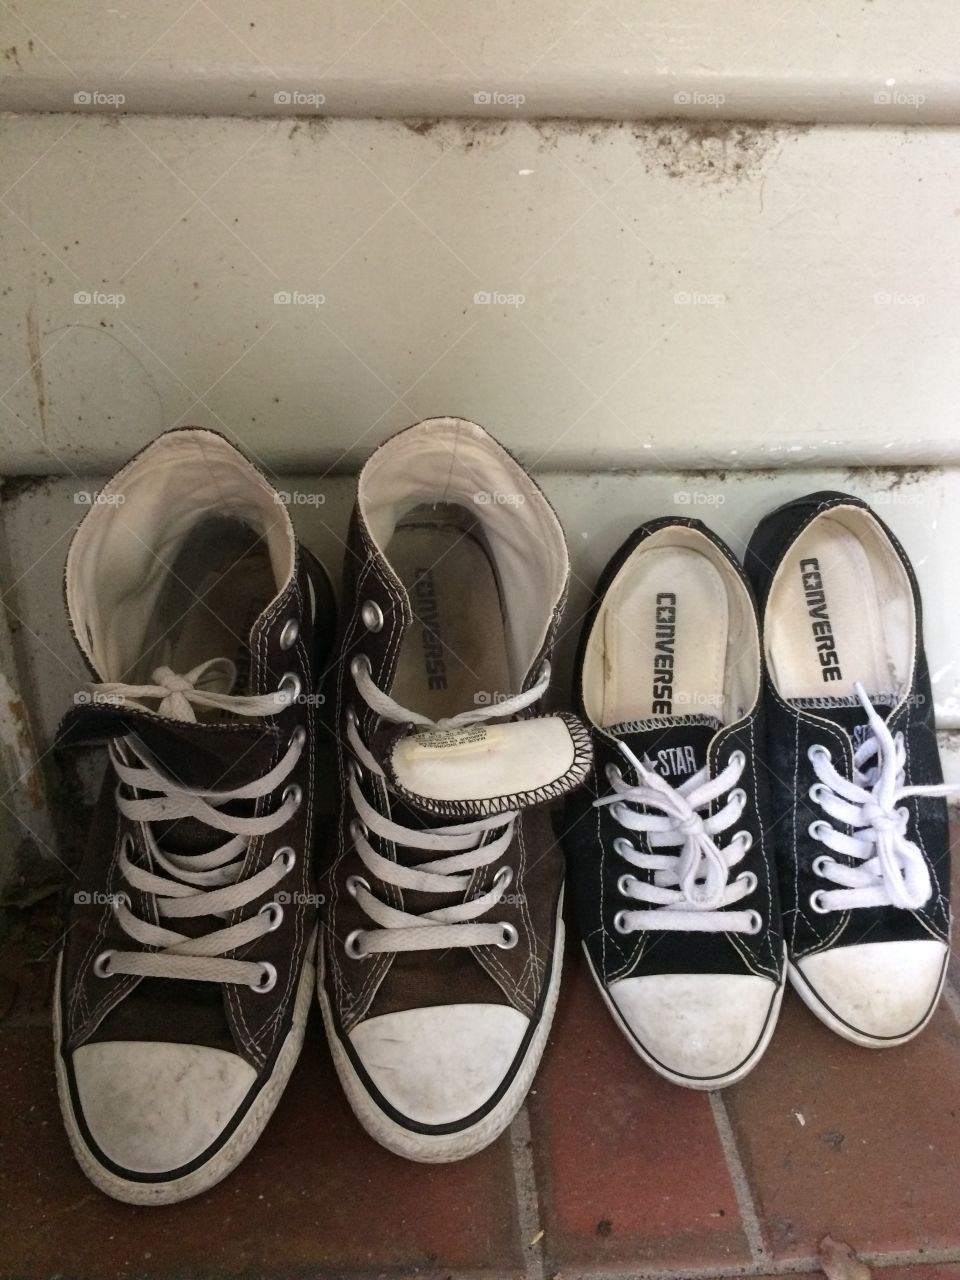 Classic converse shoes 